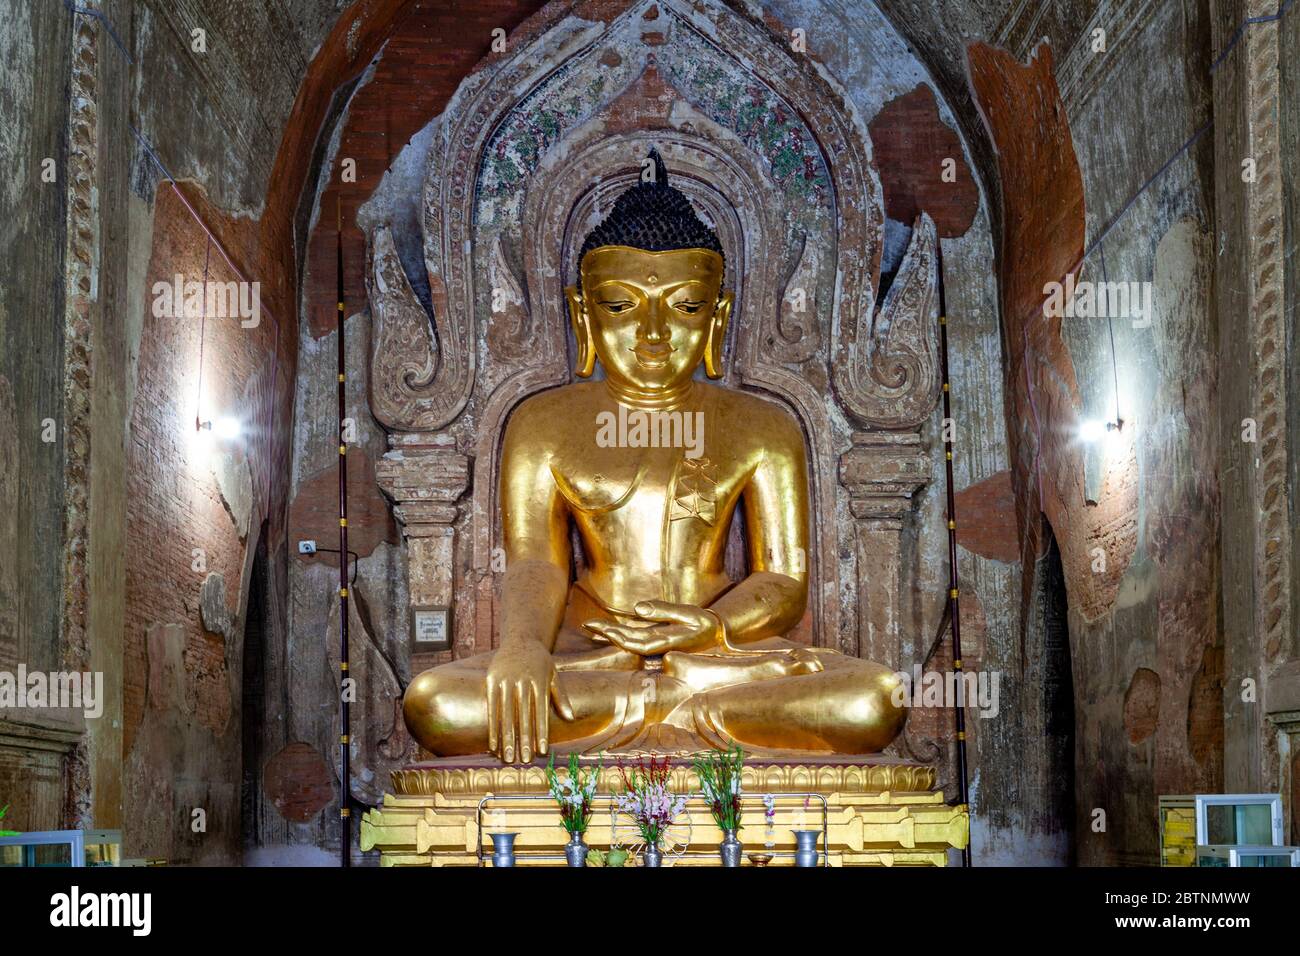 A Large Buddha Statue At Htilominlo Temple, Bagan, Mandalay Region, Myanmar. Stock Photo